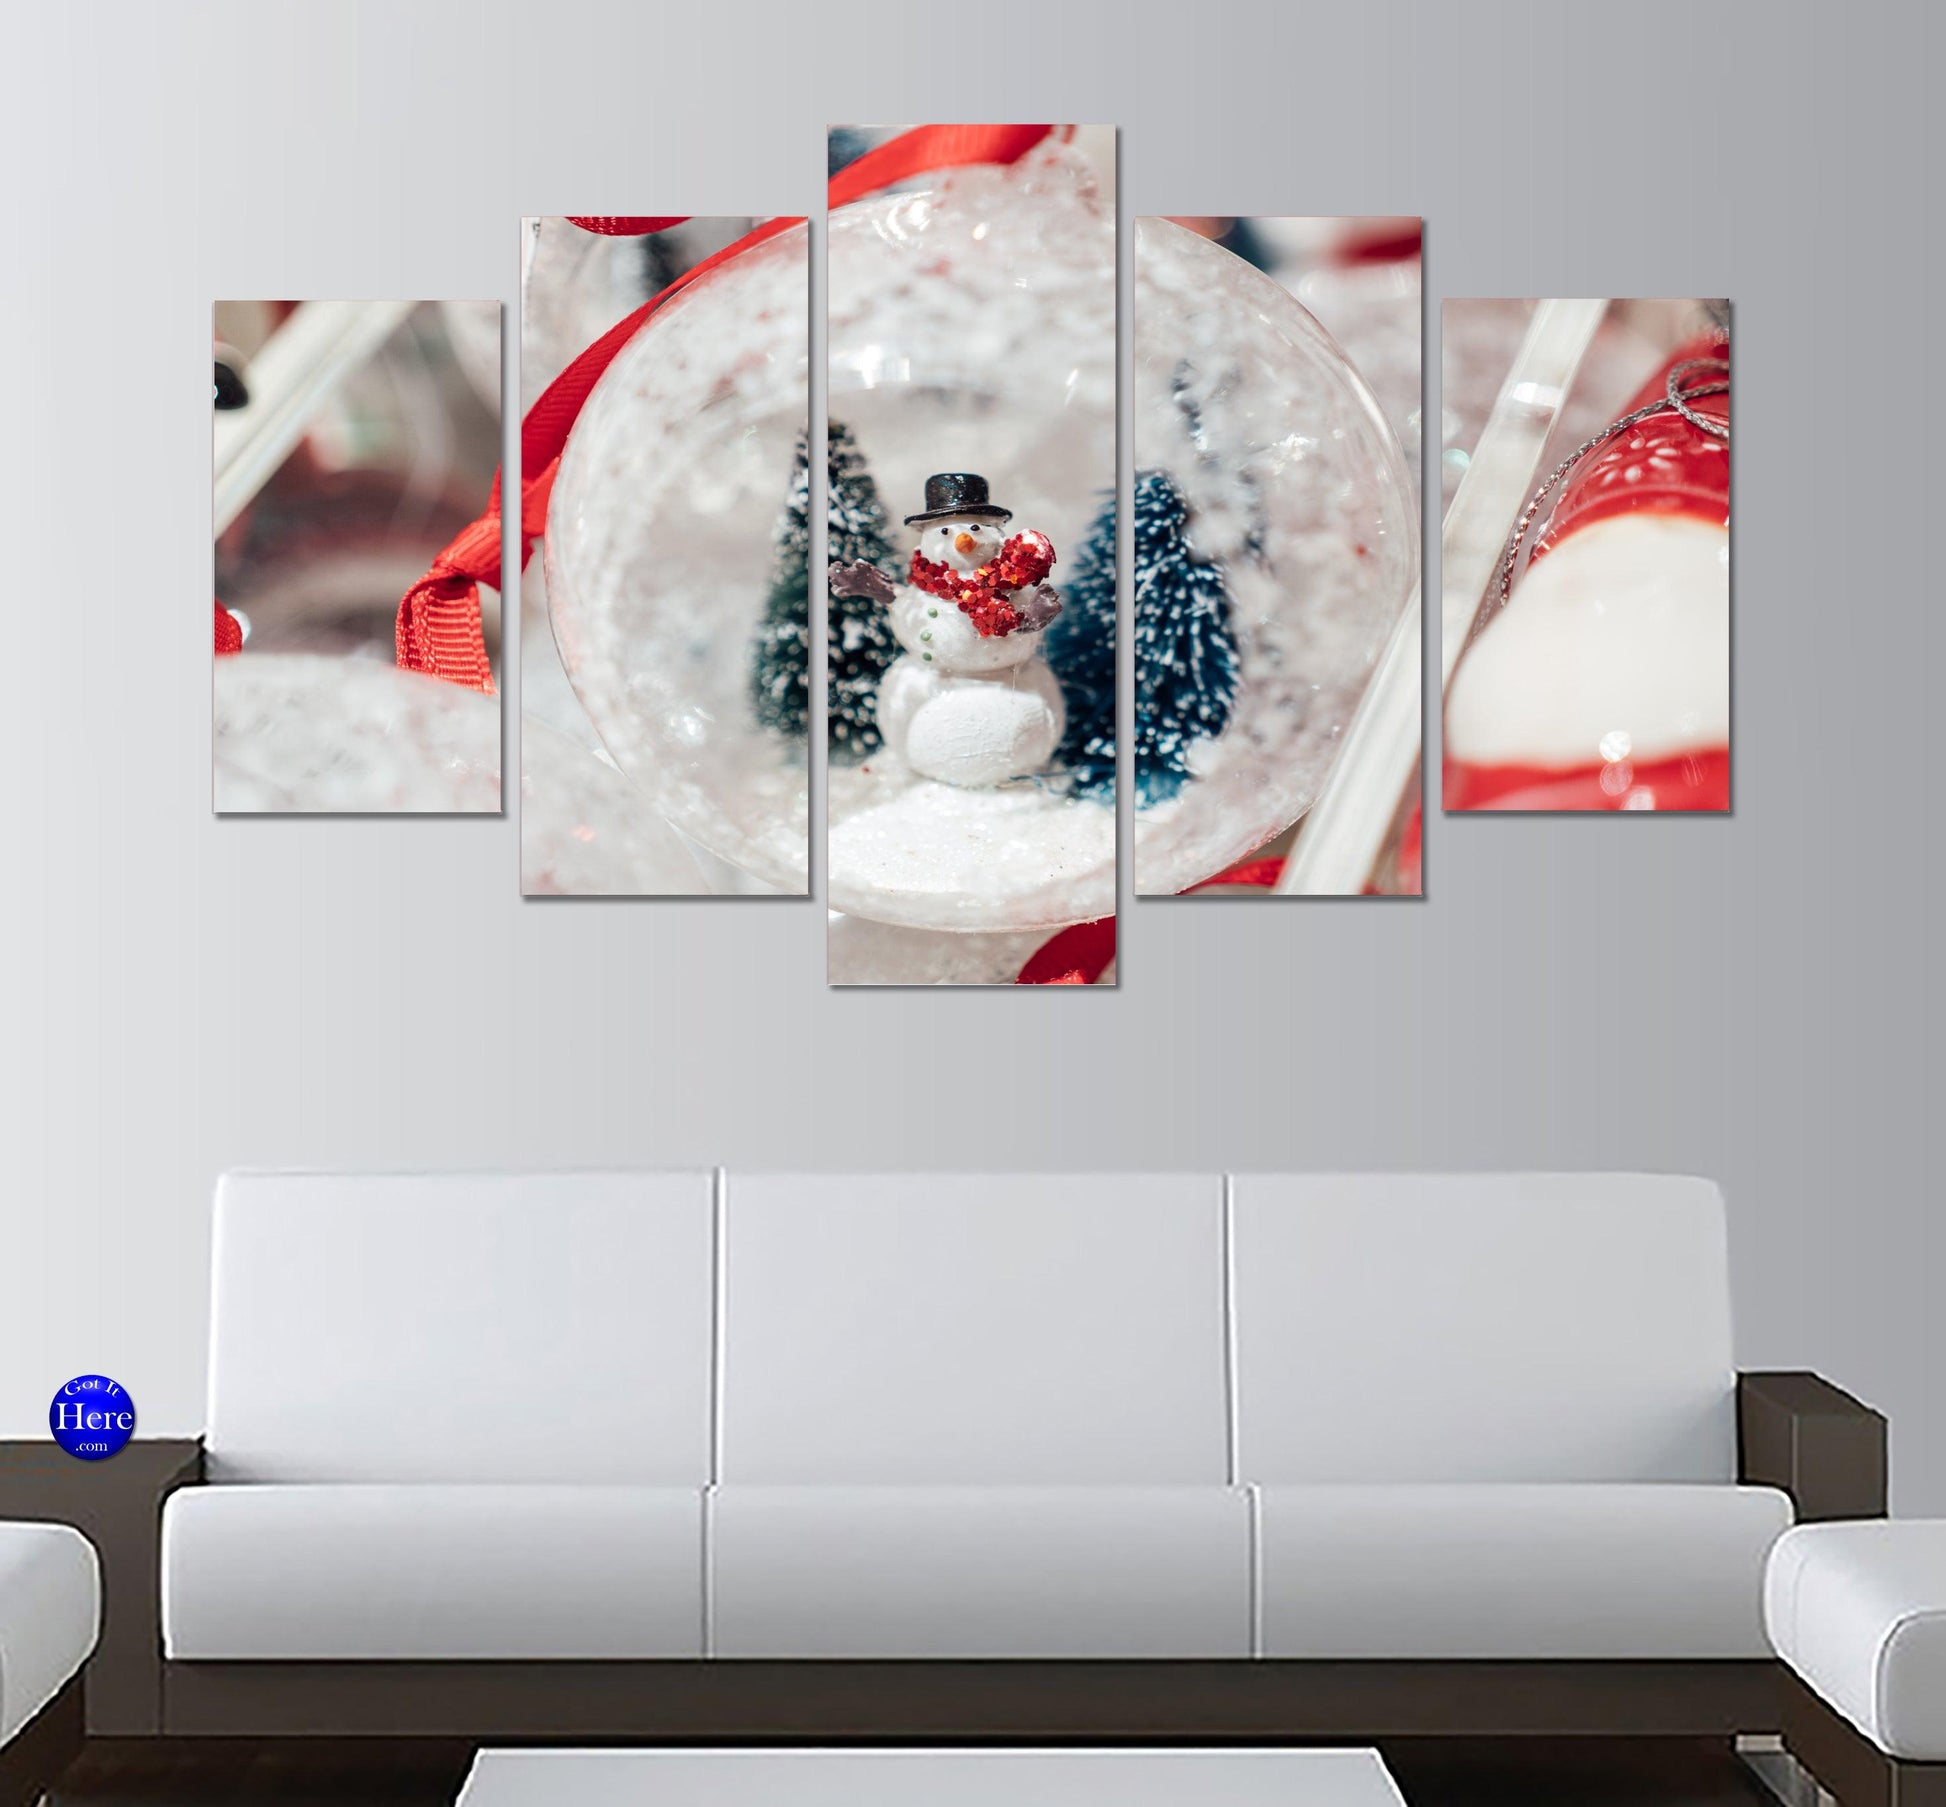 Snowman Snow Globe Christmas Ornament 5 Panel Canvas Print Wall Art - GotItHere.com